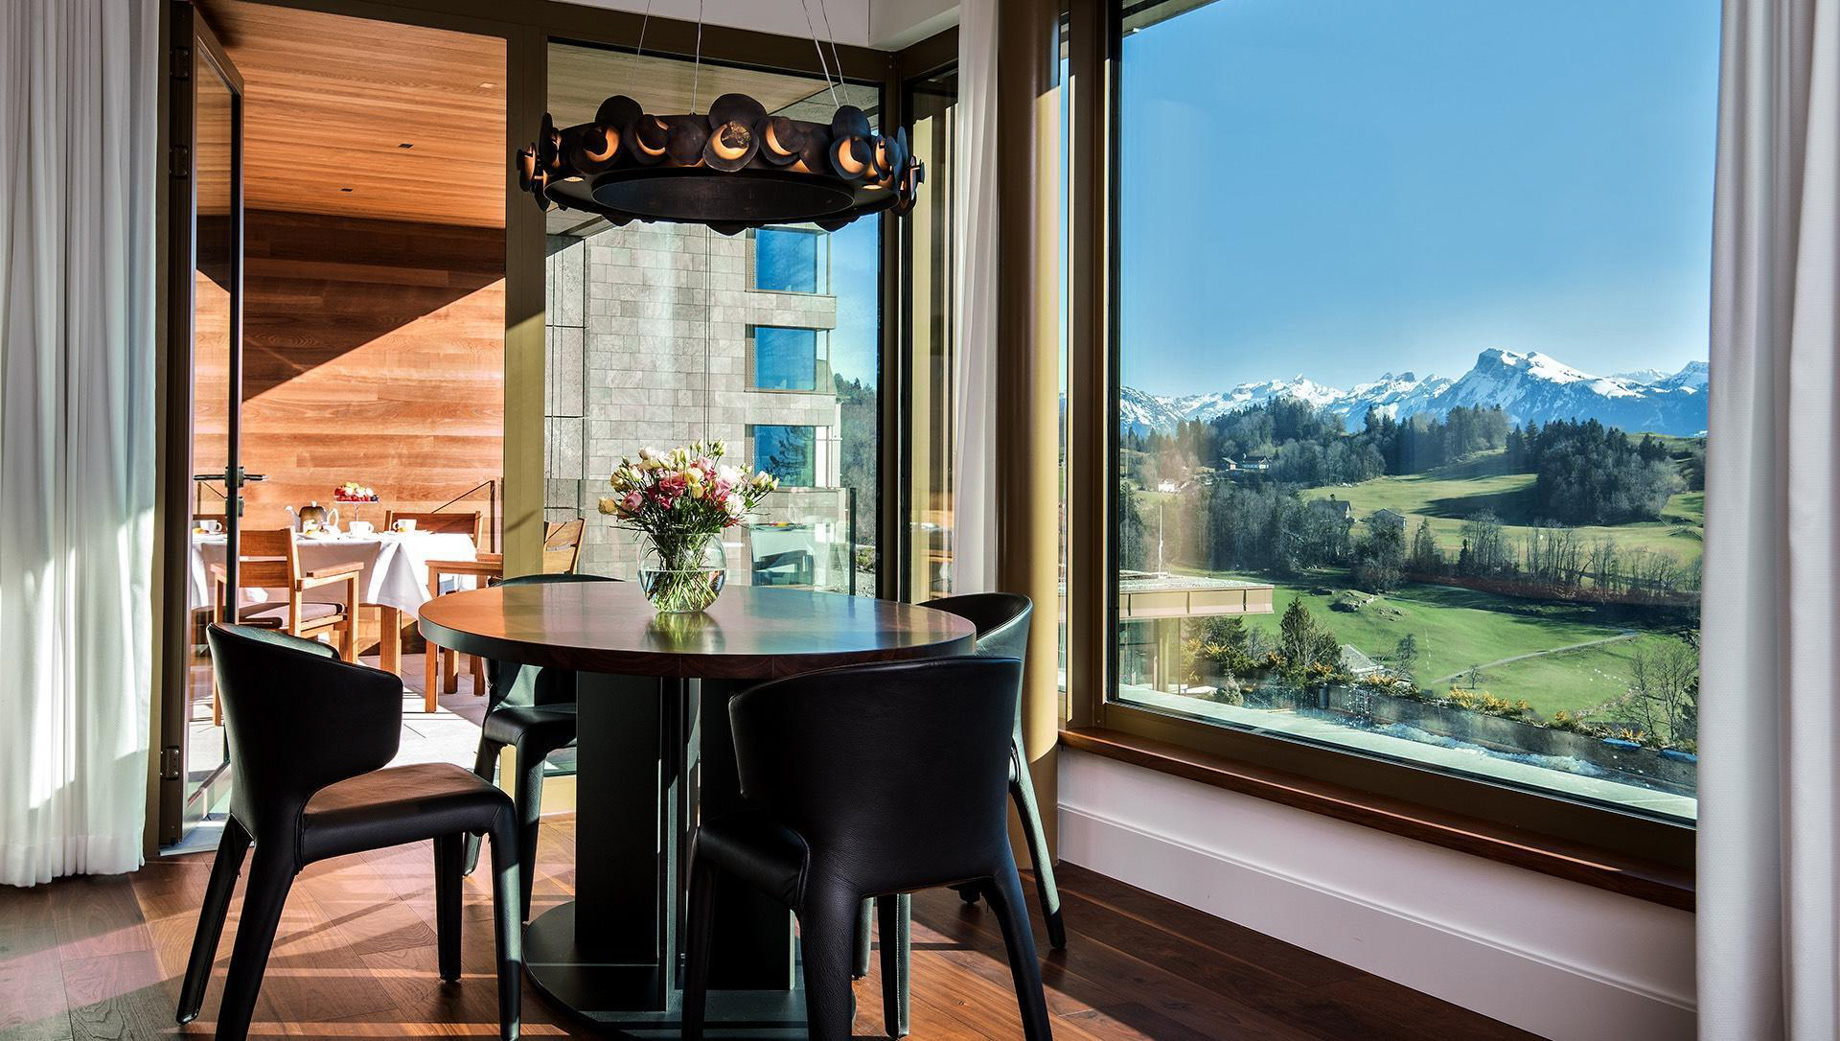 Burgenstock Hotel & Alpine Spa – Obburgen, Switzerland – Spa Suite Dining Area